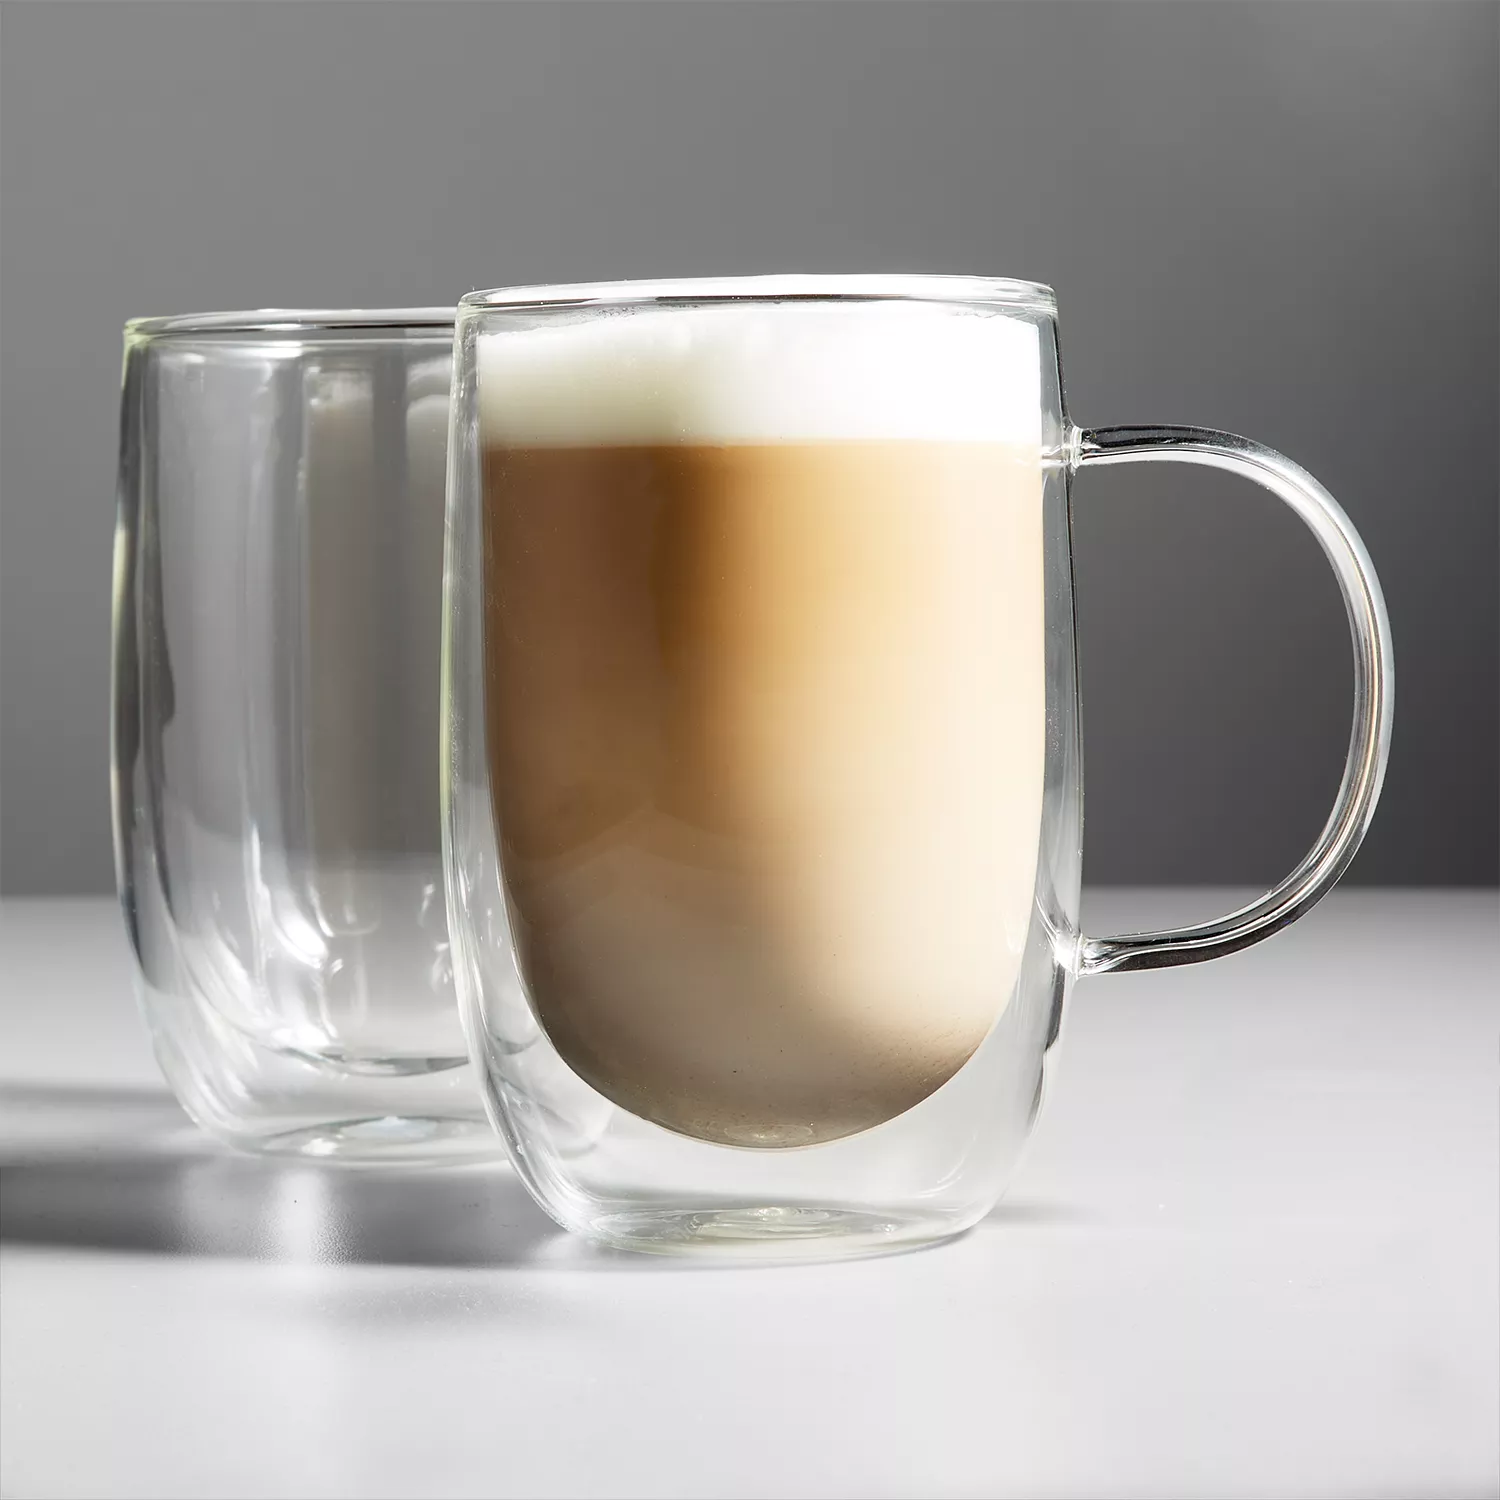 DeLonghi Double Walled Glassware Bundle (Espresso, Cappuccino, Latte) –  Home Coffee Solutions